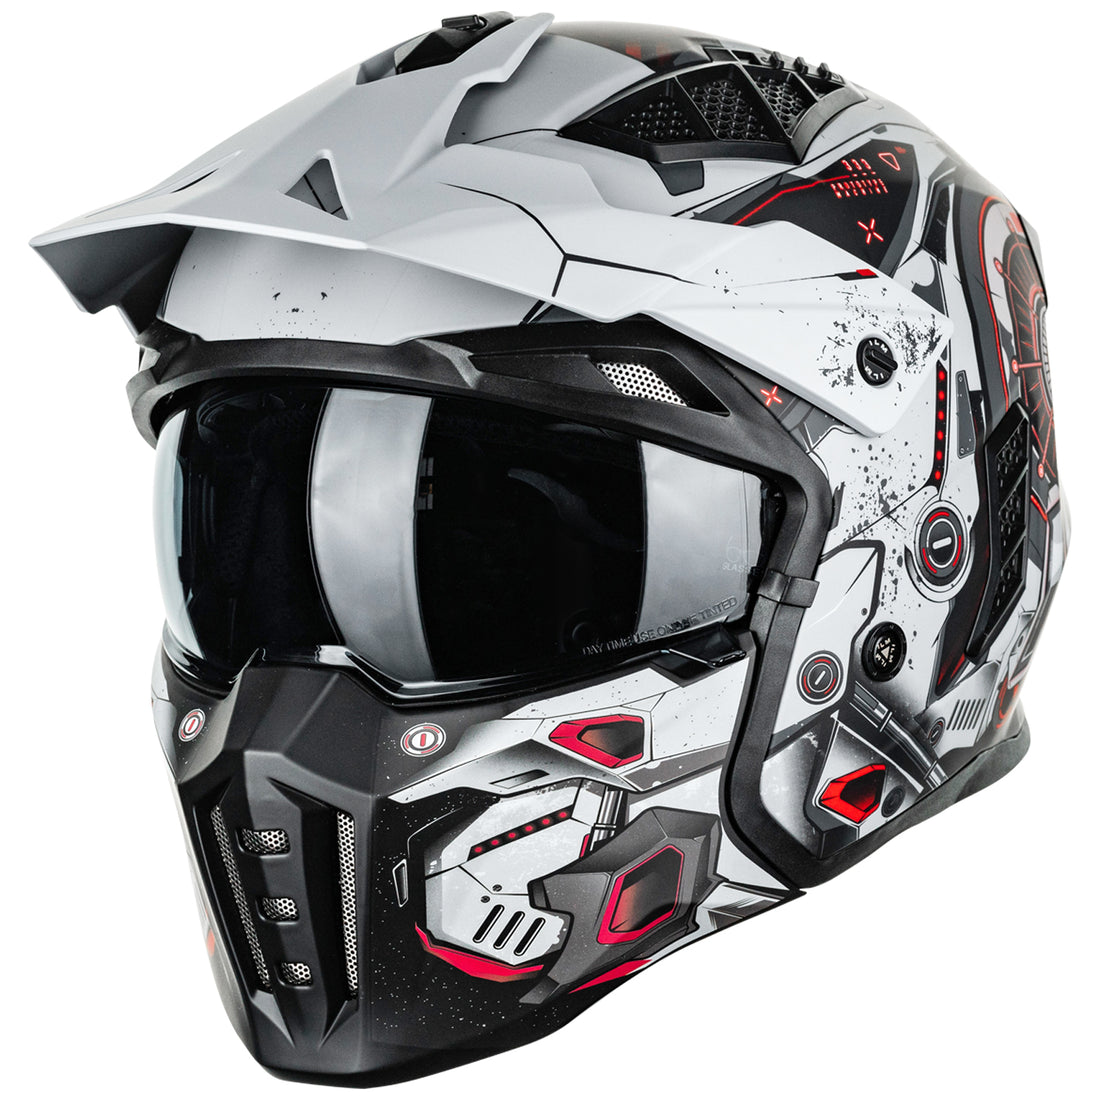 Ece-R22/05 Approved Motorcycle Half Helmet For Women